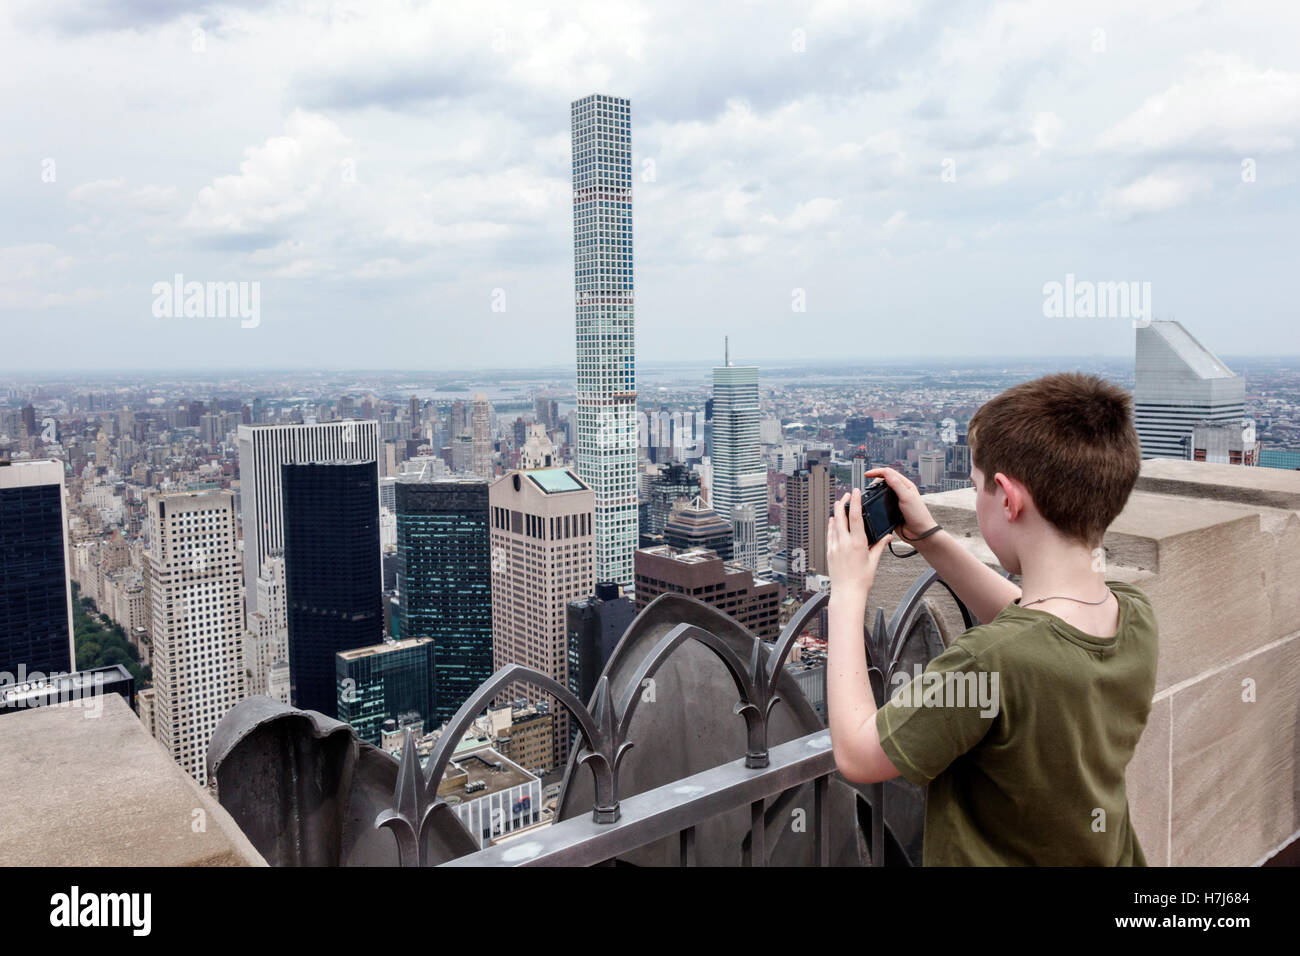 New York City,NY NYC,Manhattan,Midtown,30 Rockefeller Center,GE building,Top of the Rock,piattaforma di osservazione,skyline,grattacieli,ragazzi ragazzi ragazzi ragazzi pazzi k Foto Stock